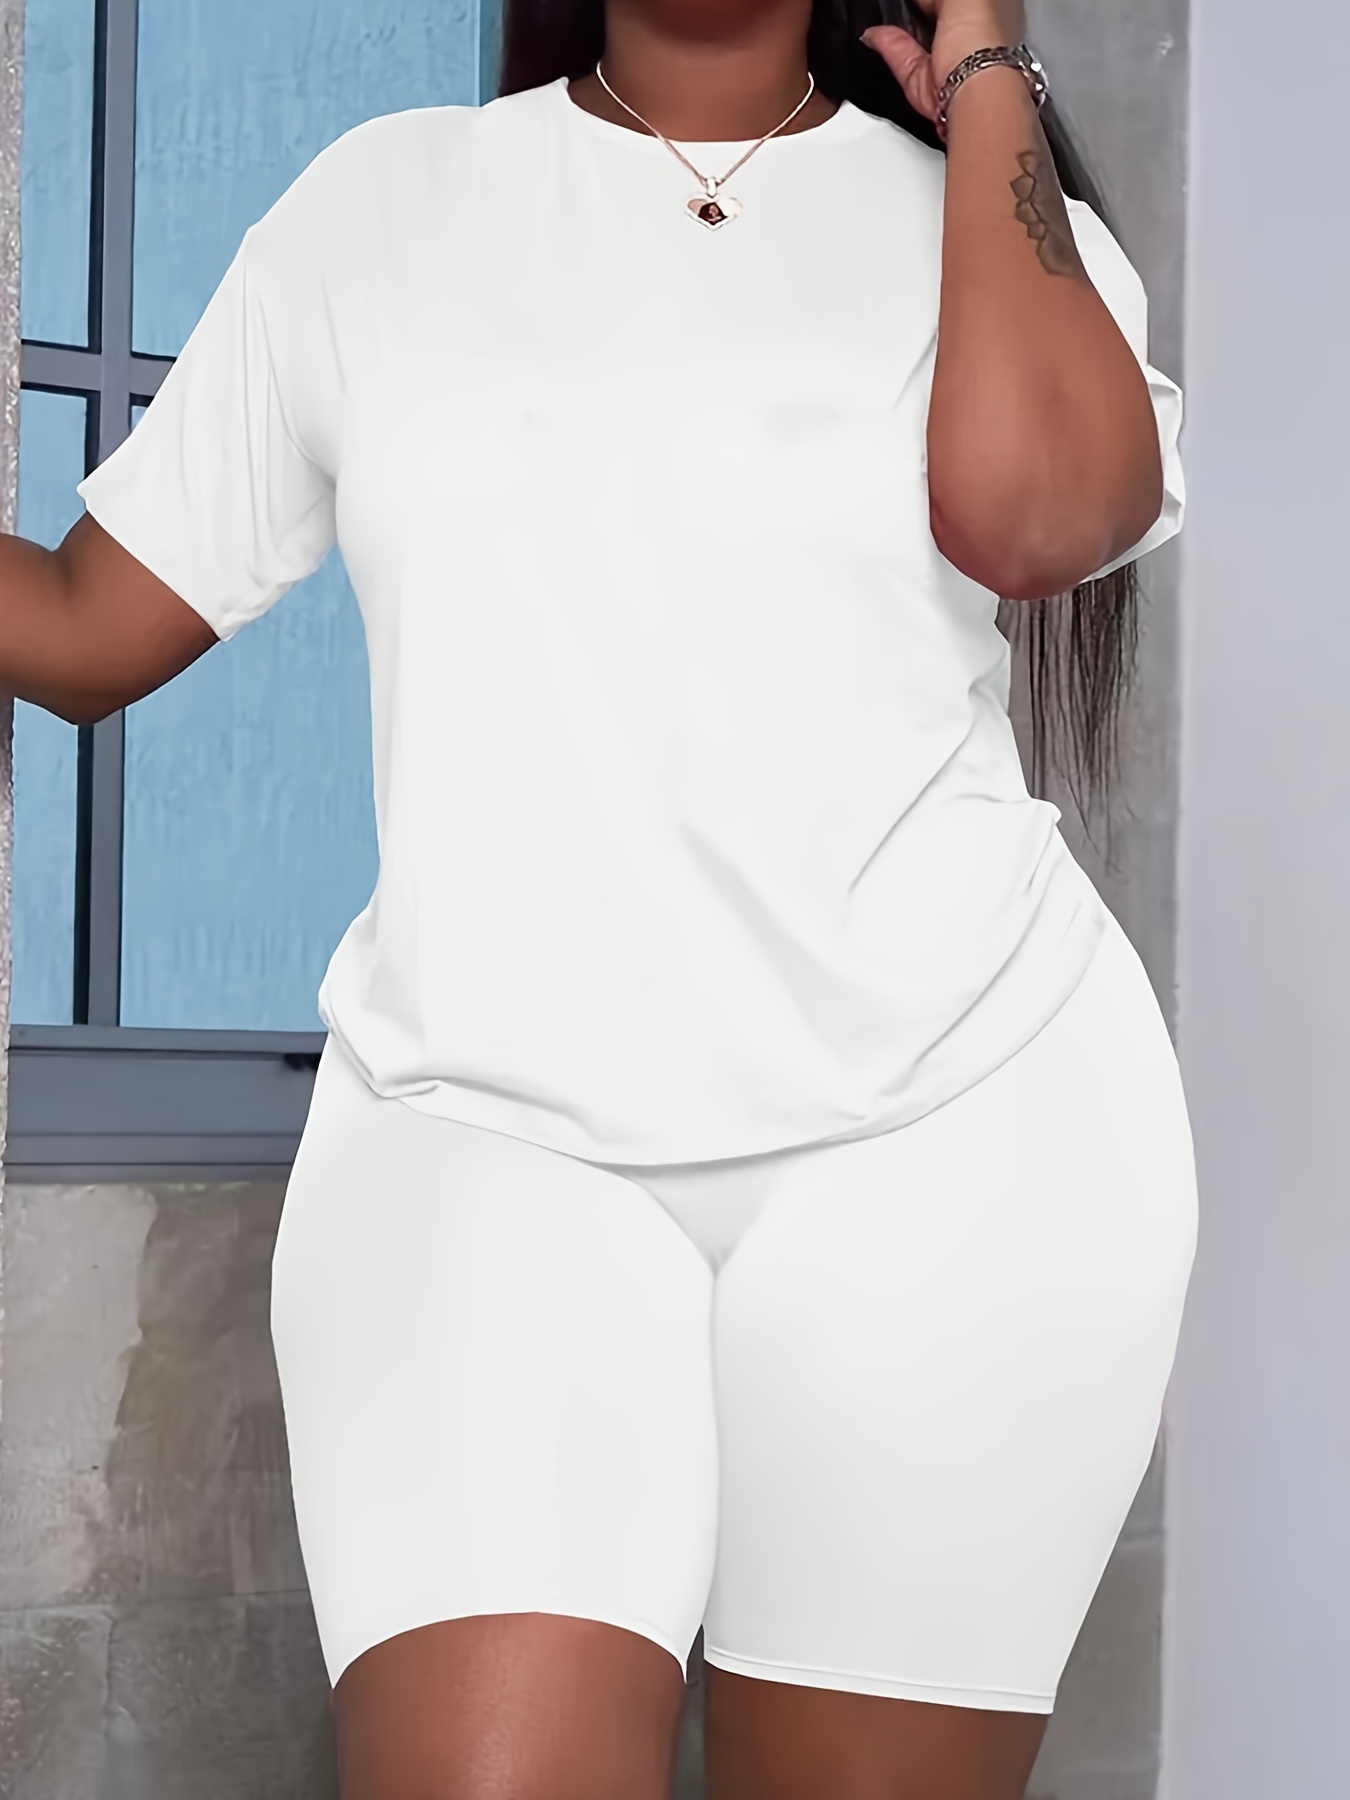 White shorts women – Plus size active shapewear-2 back pockets Belore Slims